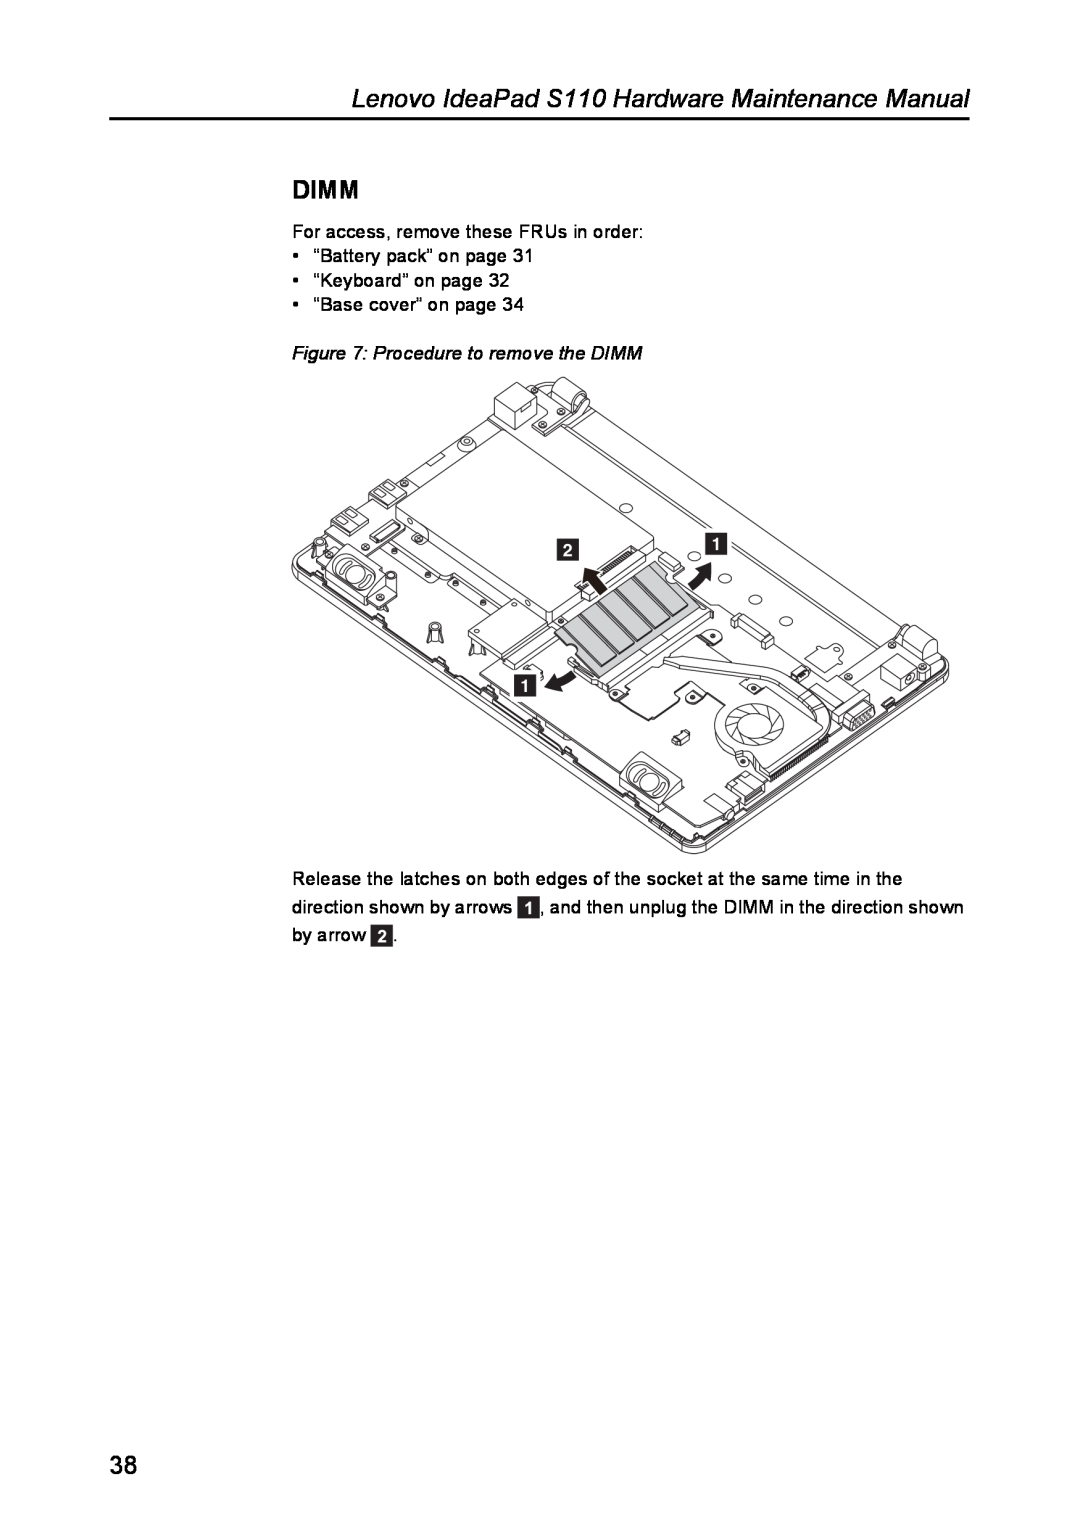 Lenovo manual Dimm, Procedure to remove the DIMM, Lenovo IdeaPad S110 Hardware Maintenance Manual 